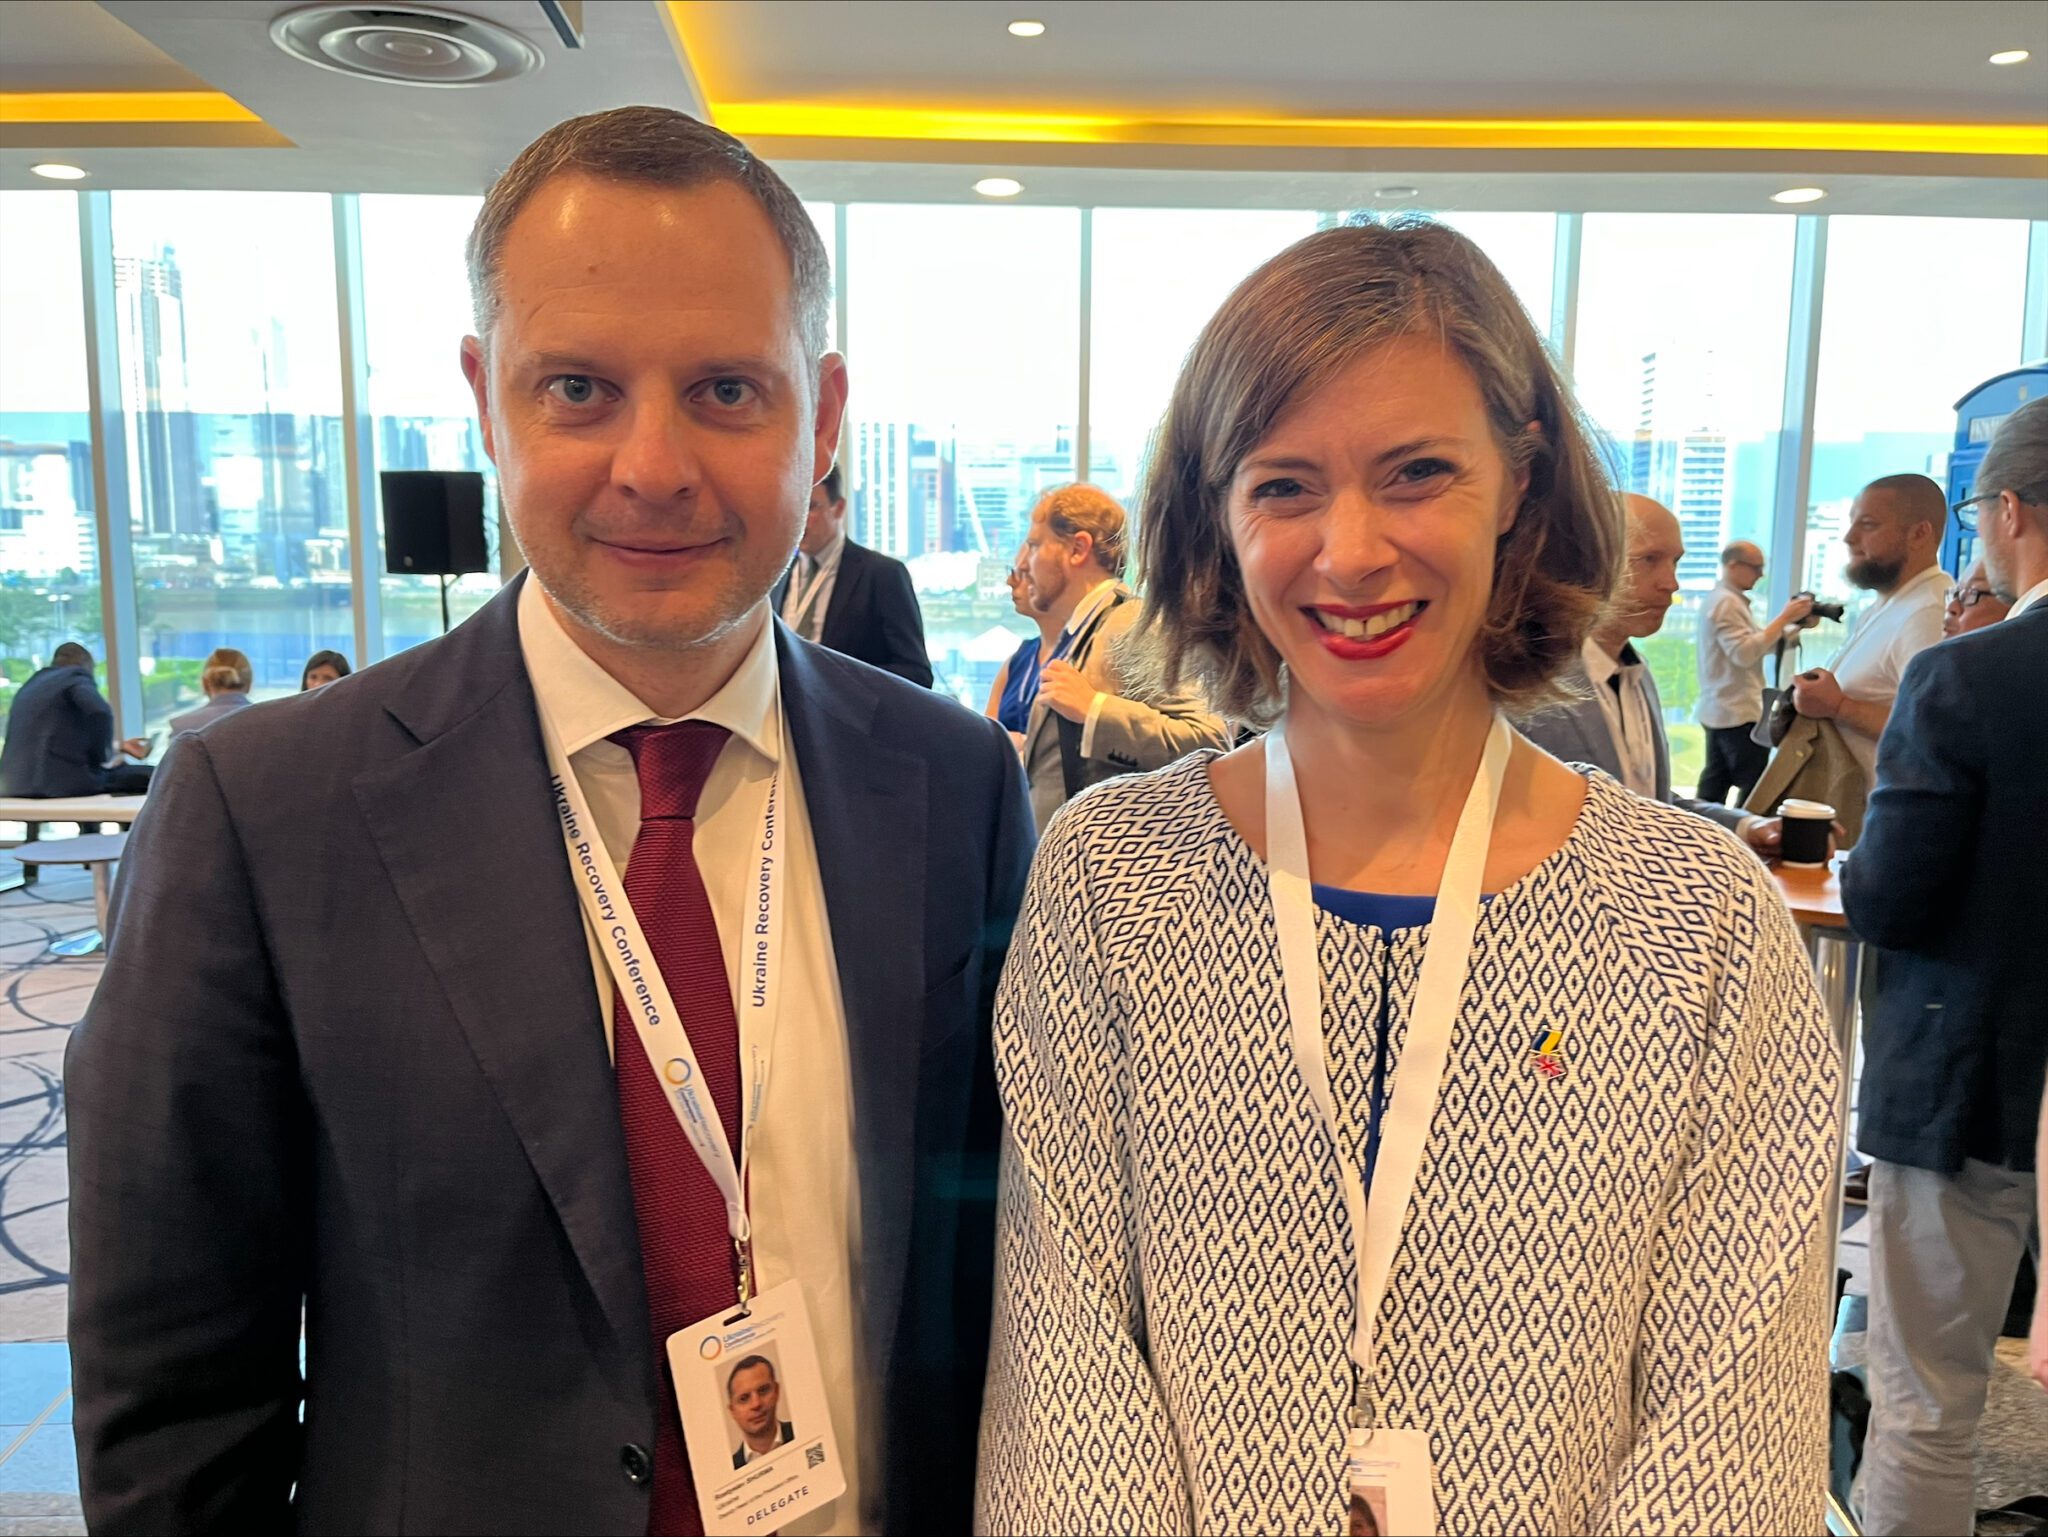 Rostyslav Shurma, Deputy Head of the Office of the President of the Ukraine and Julia Reinaud, Senior Director, Europe, Breakthrough Energy